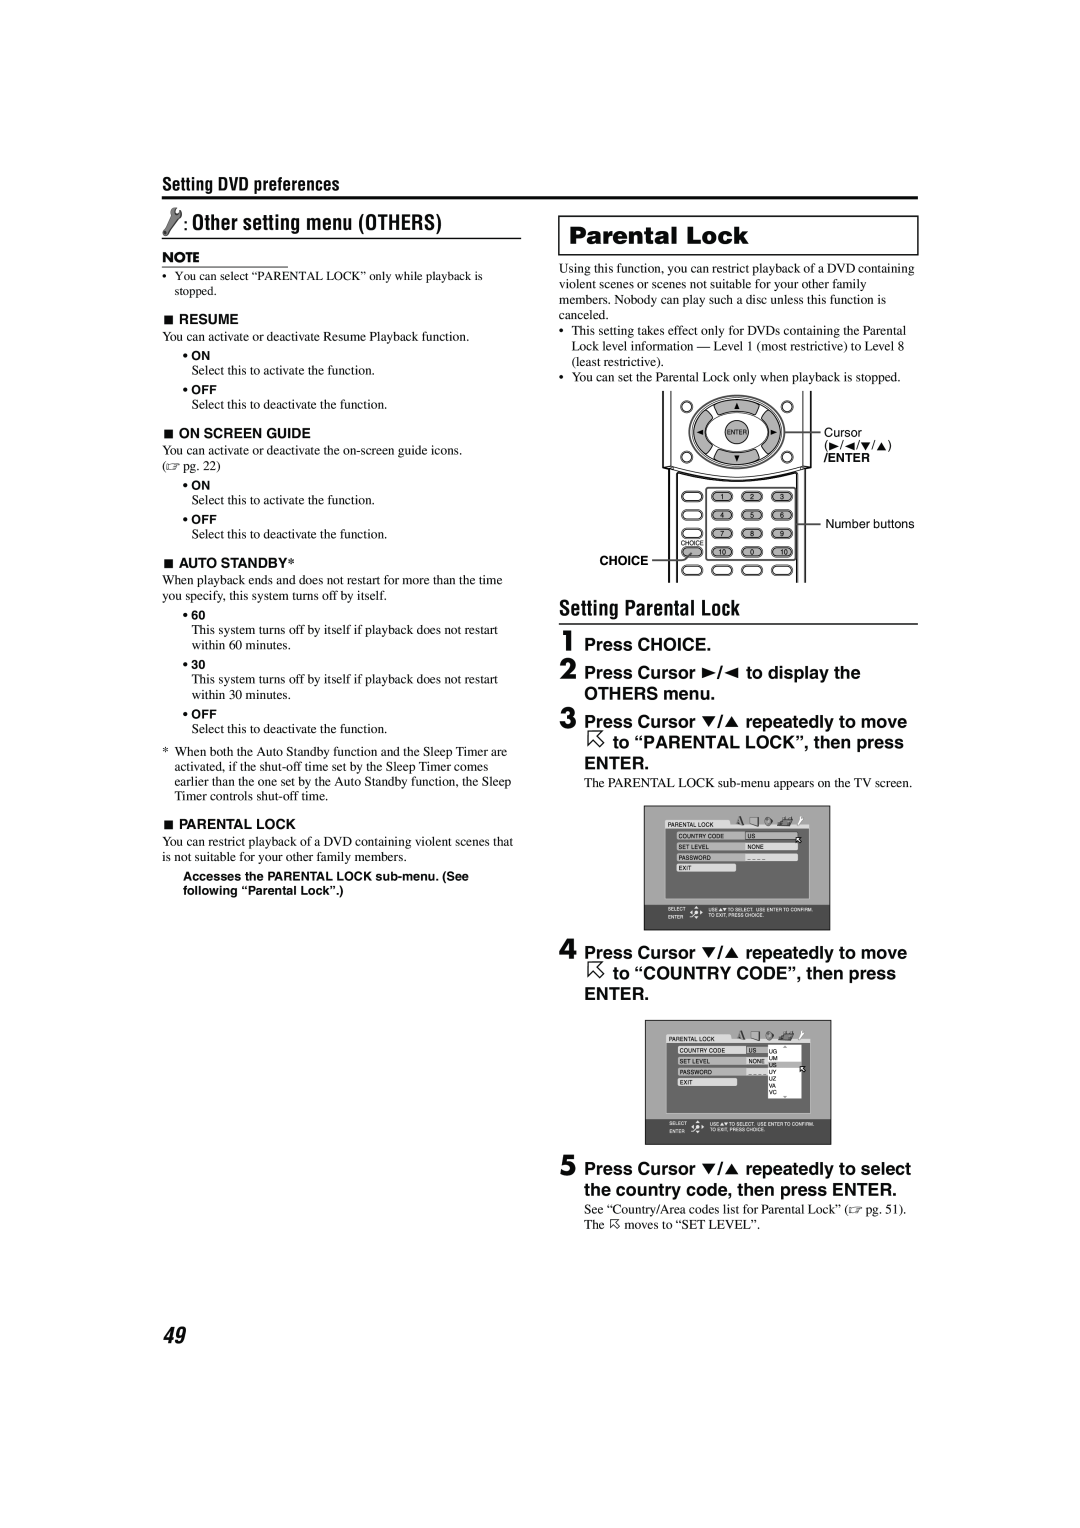 JVC TH-M42 manual Other setting menu OTHERS, Setting Parental Lock, H to “PARENTAL LOCK”, then press ENTER, Enter 